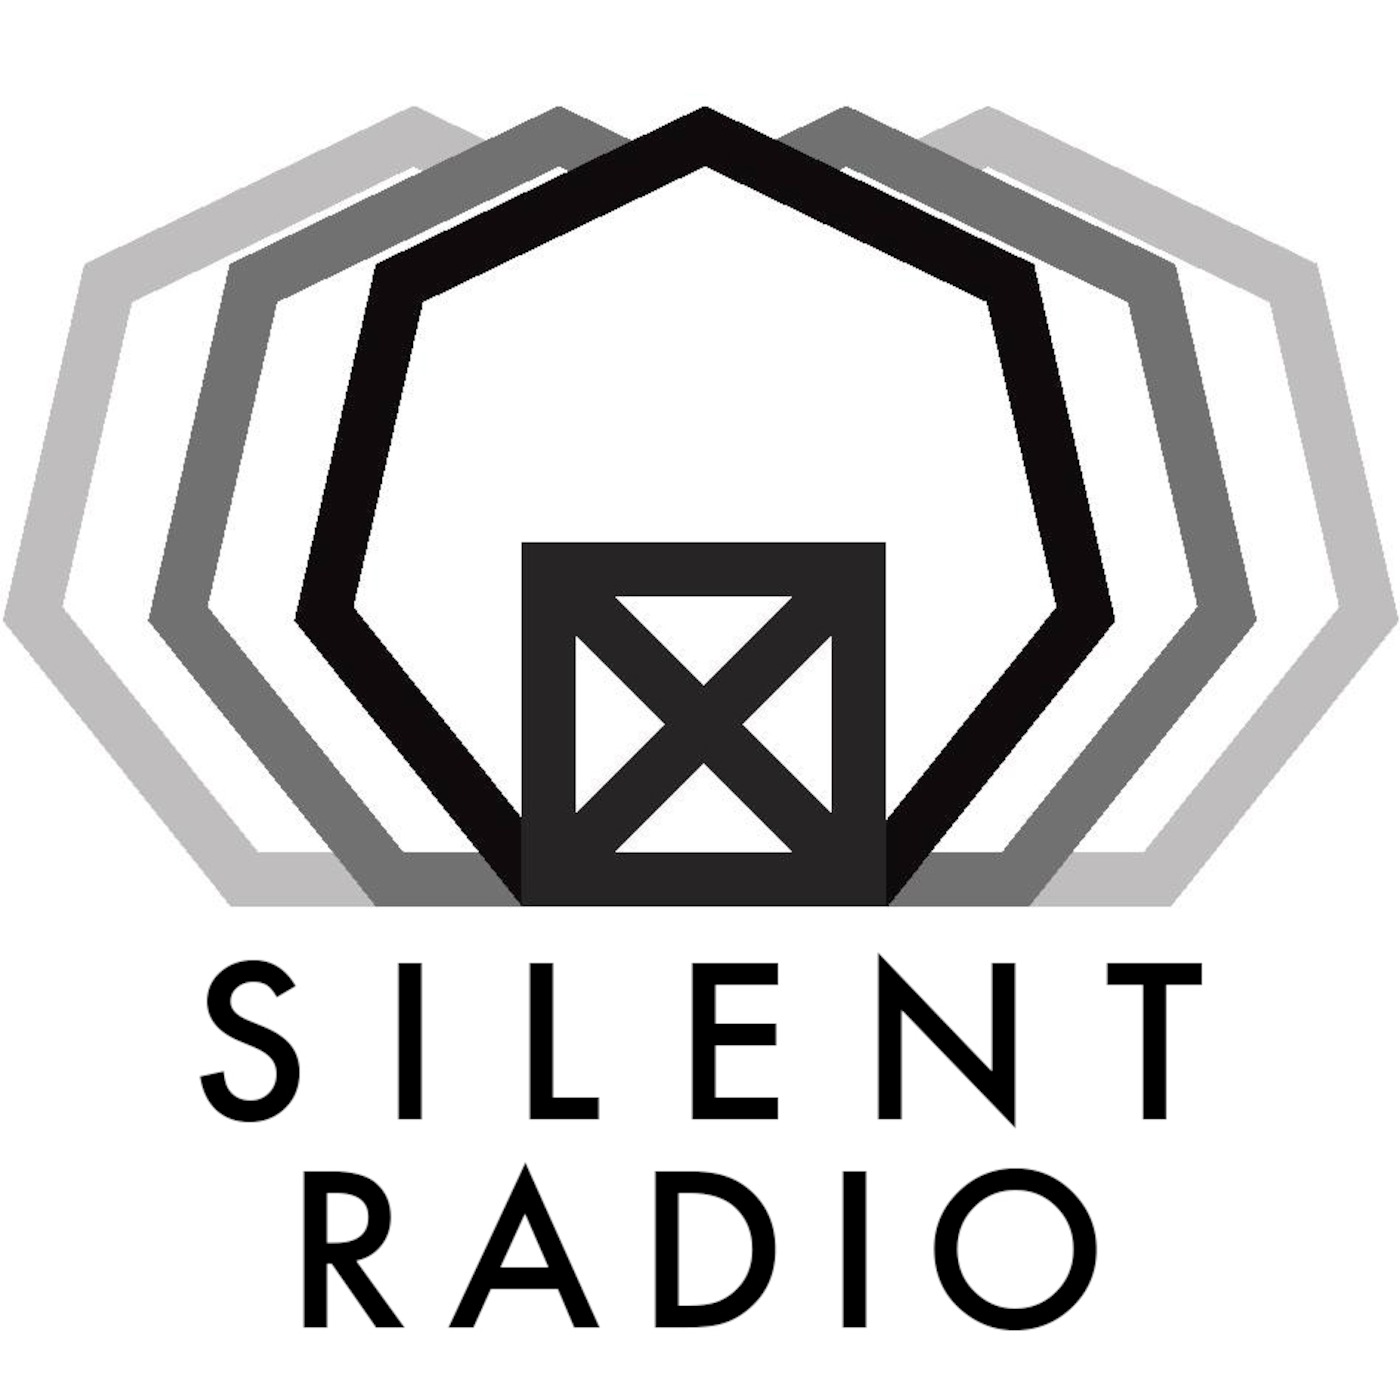 Silent Radio